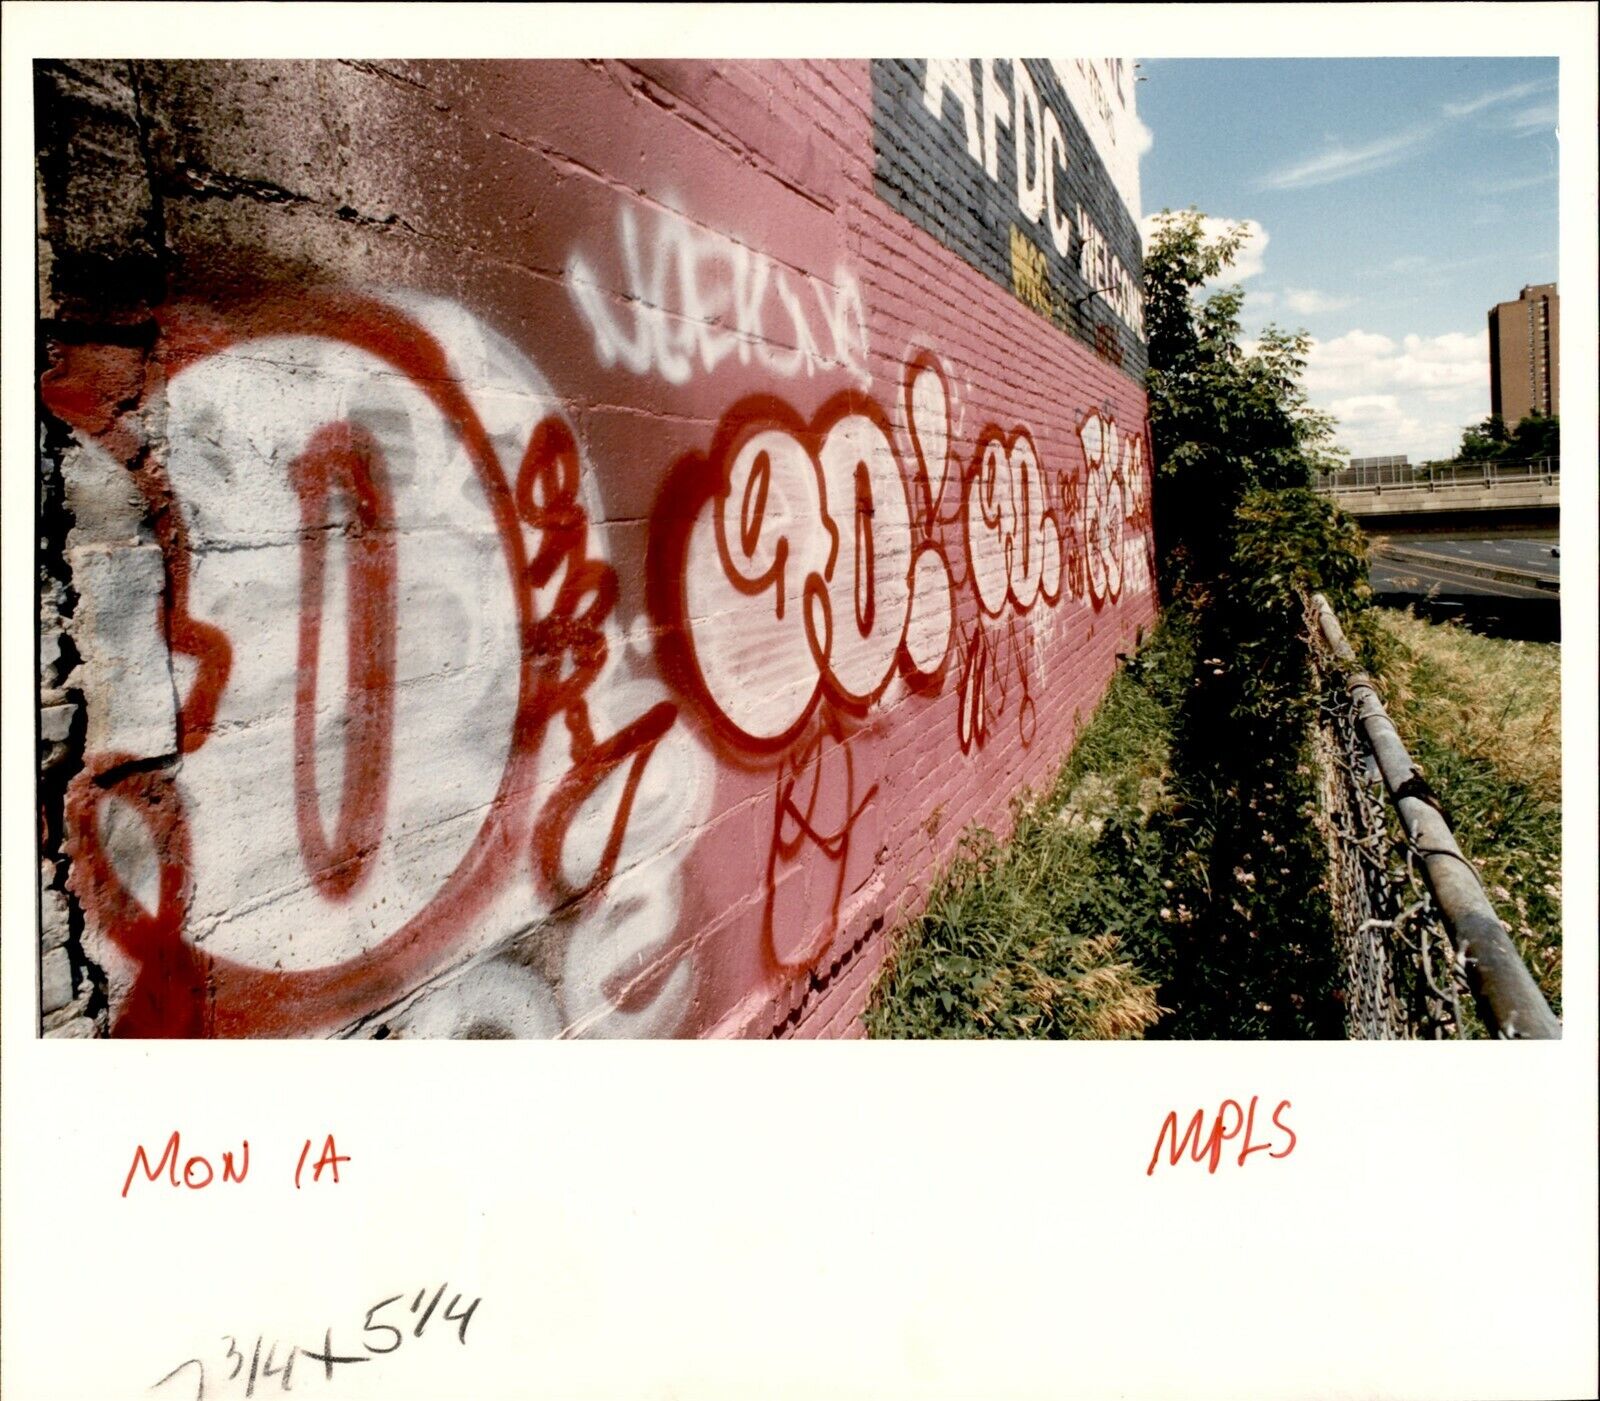 LG925 1993 Original Duane Braley Color Photo GRAFFITI ART Colorful Urban Culture